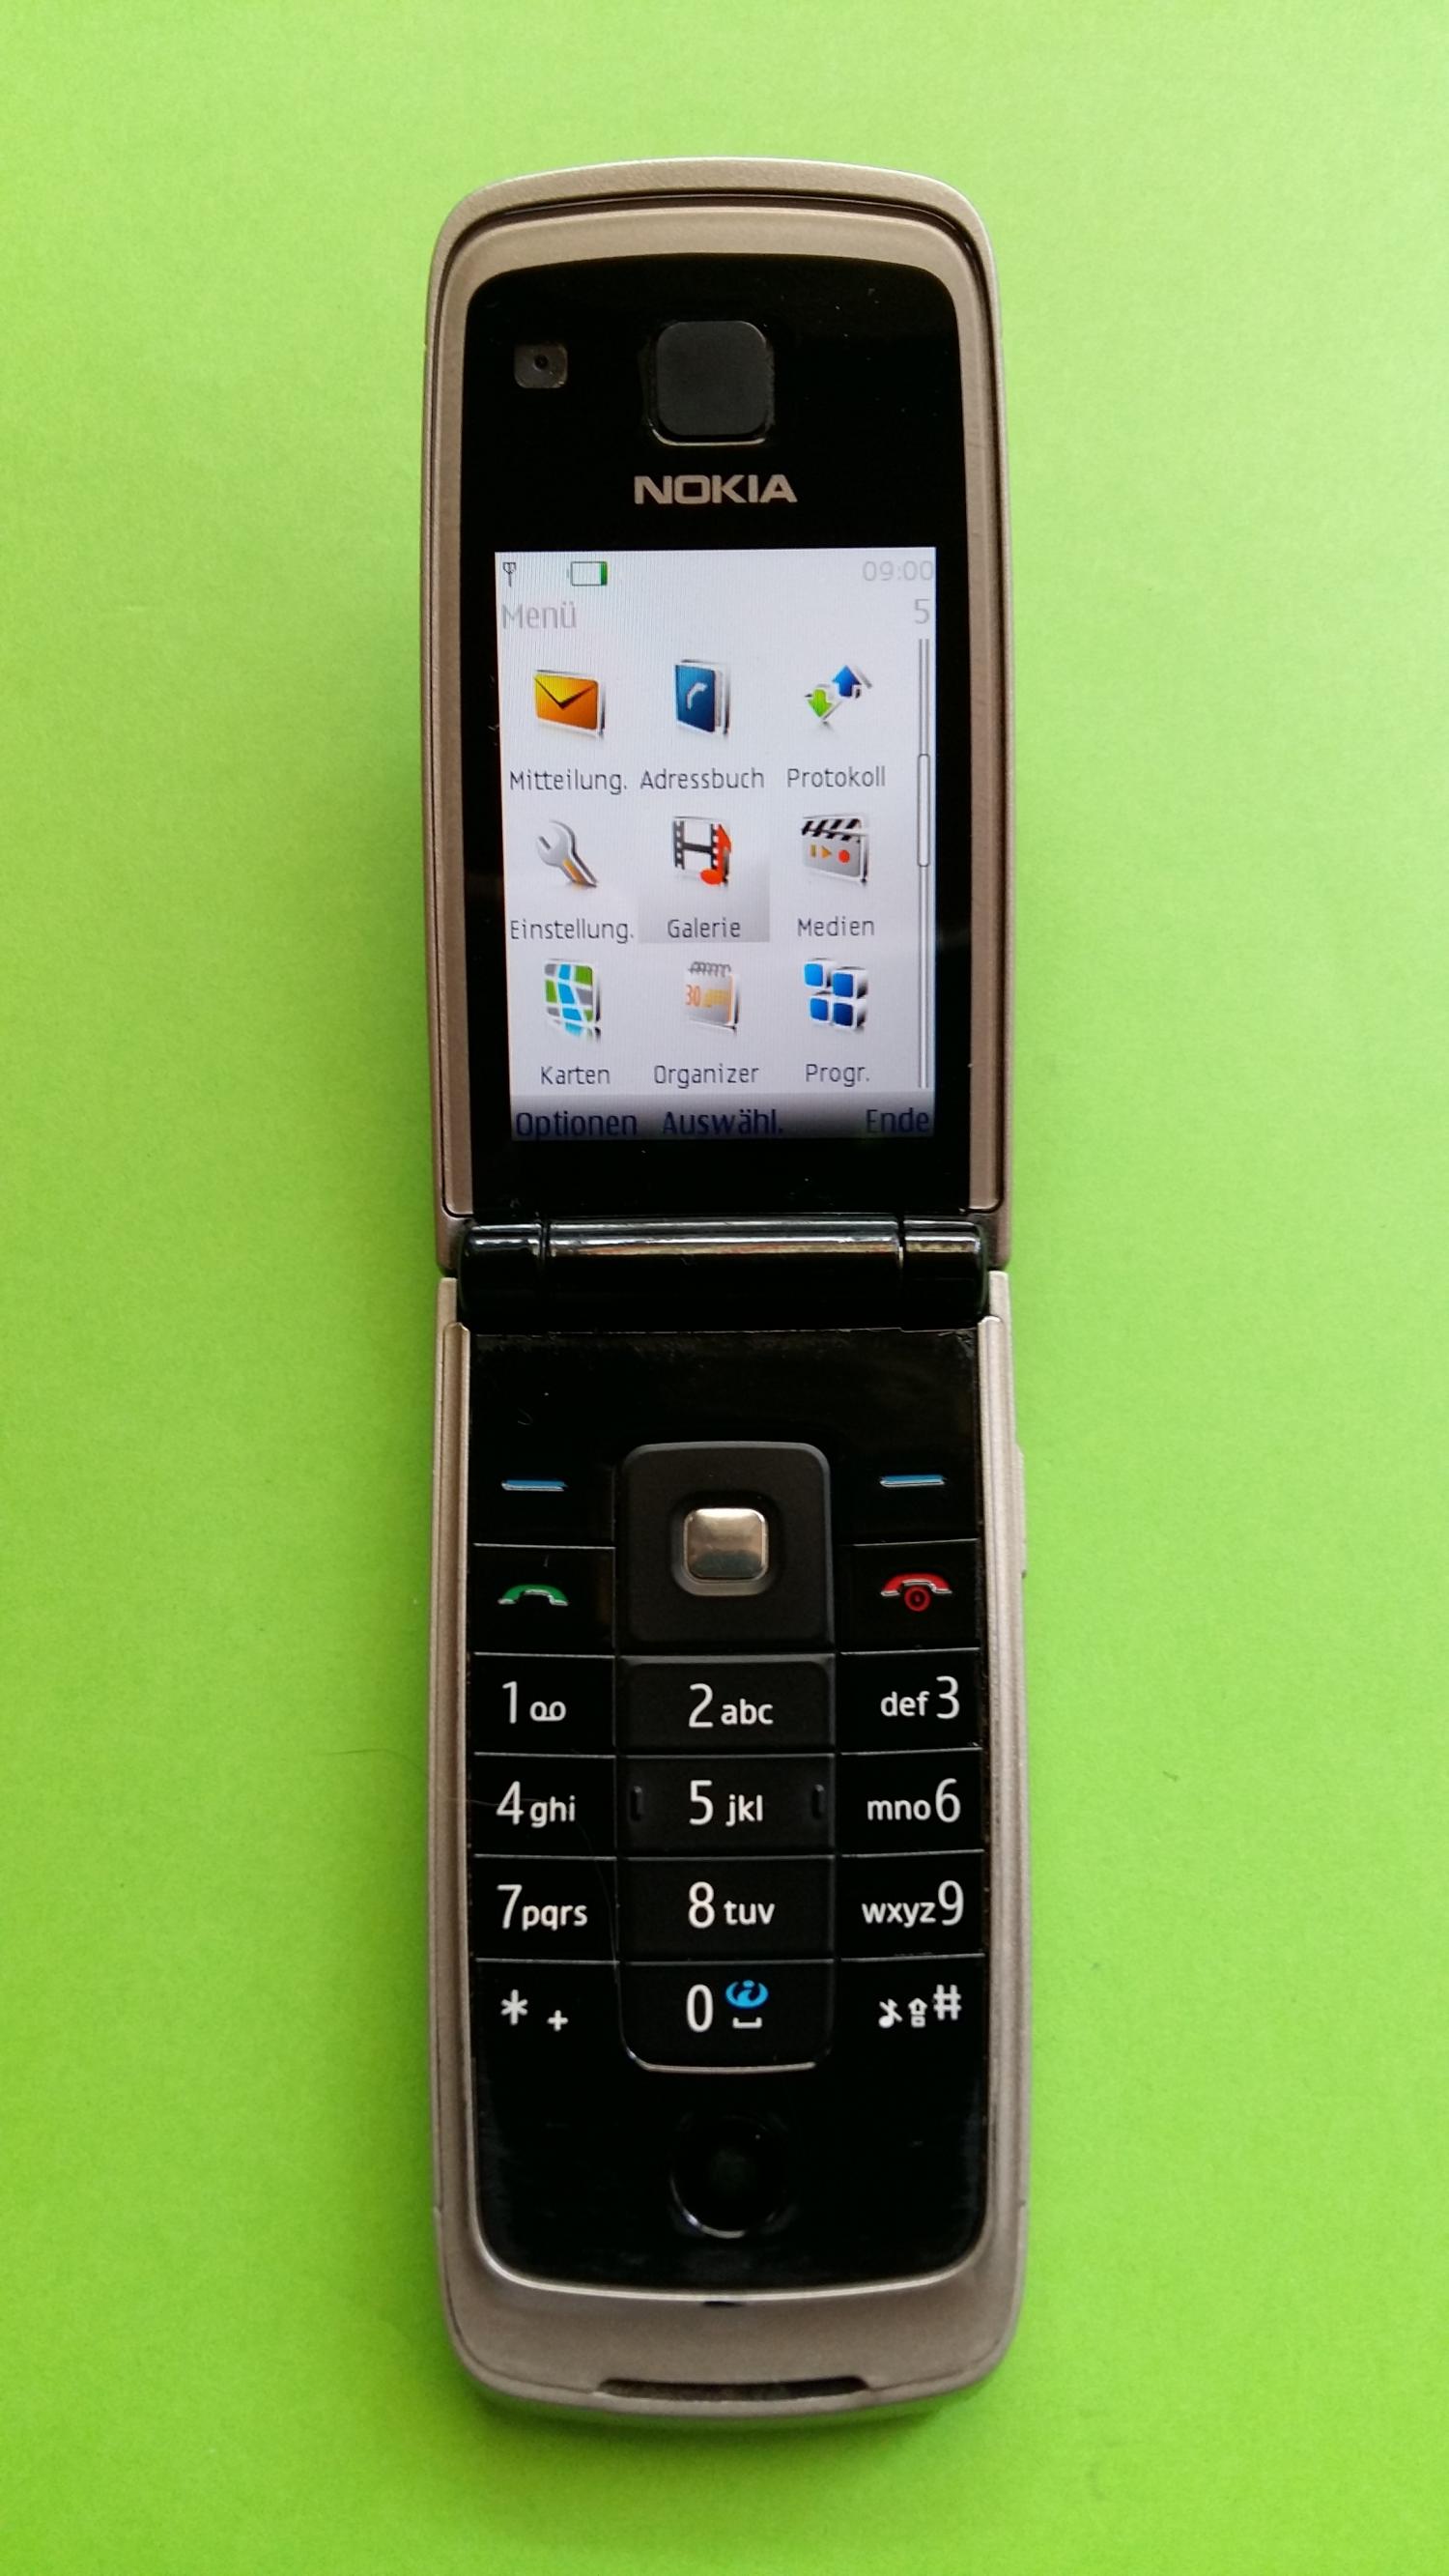 image-7331864-Nokia 6600F-1 Fold (3)2.jpg